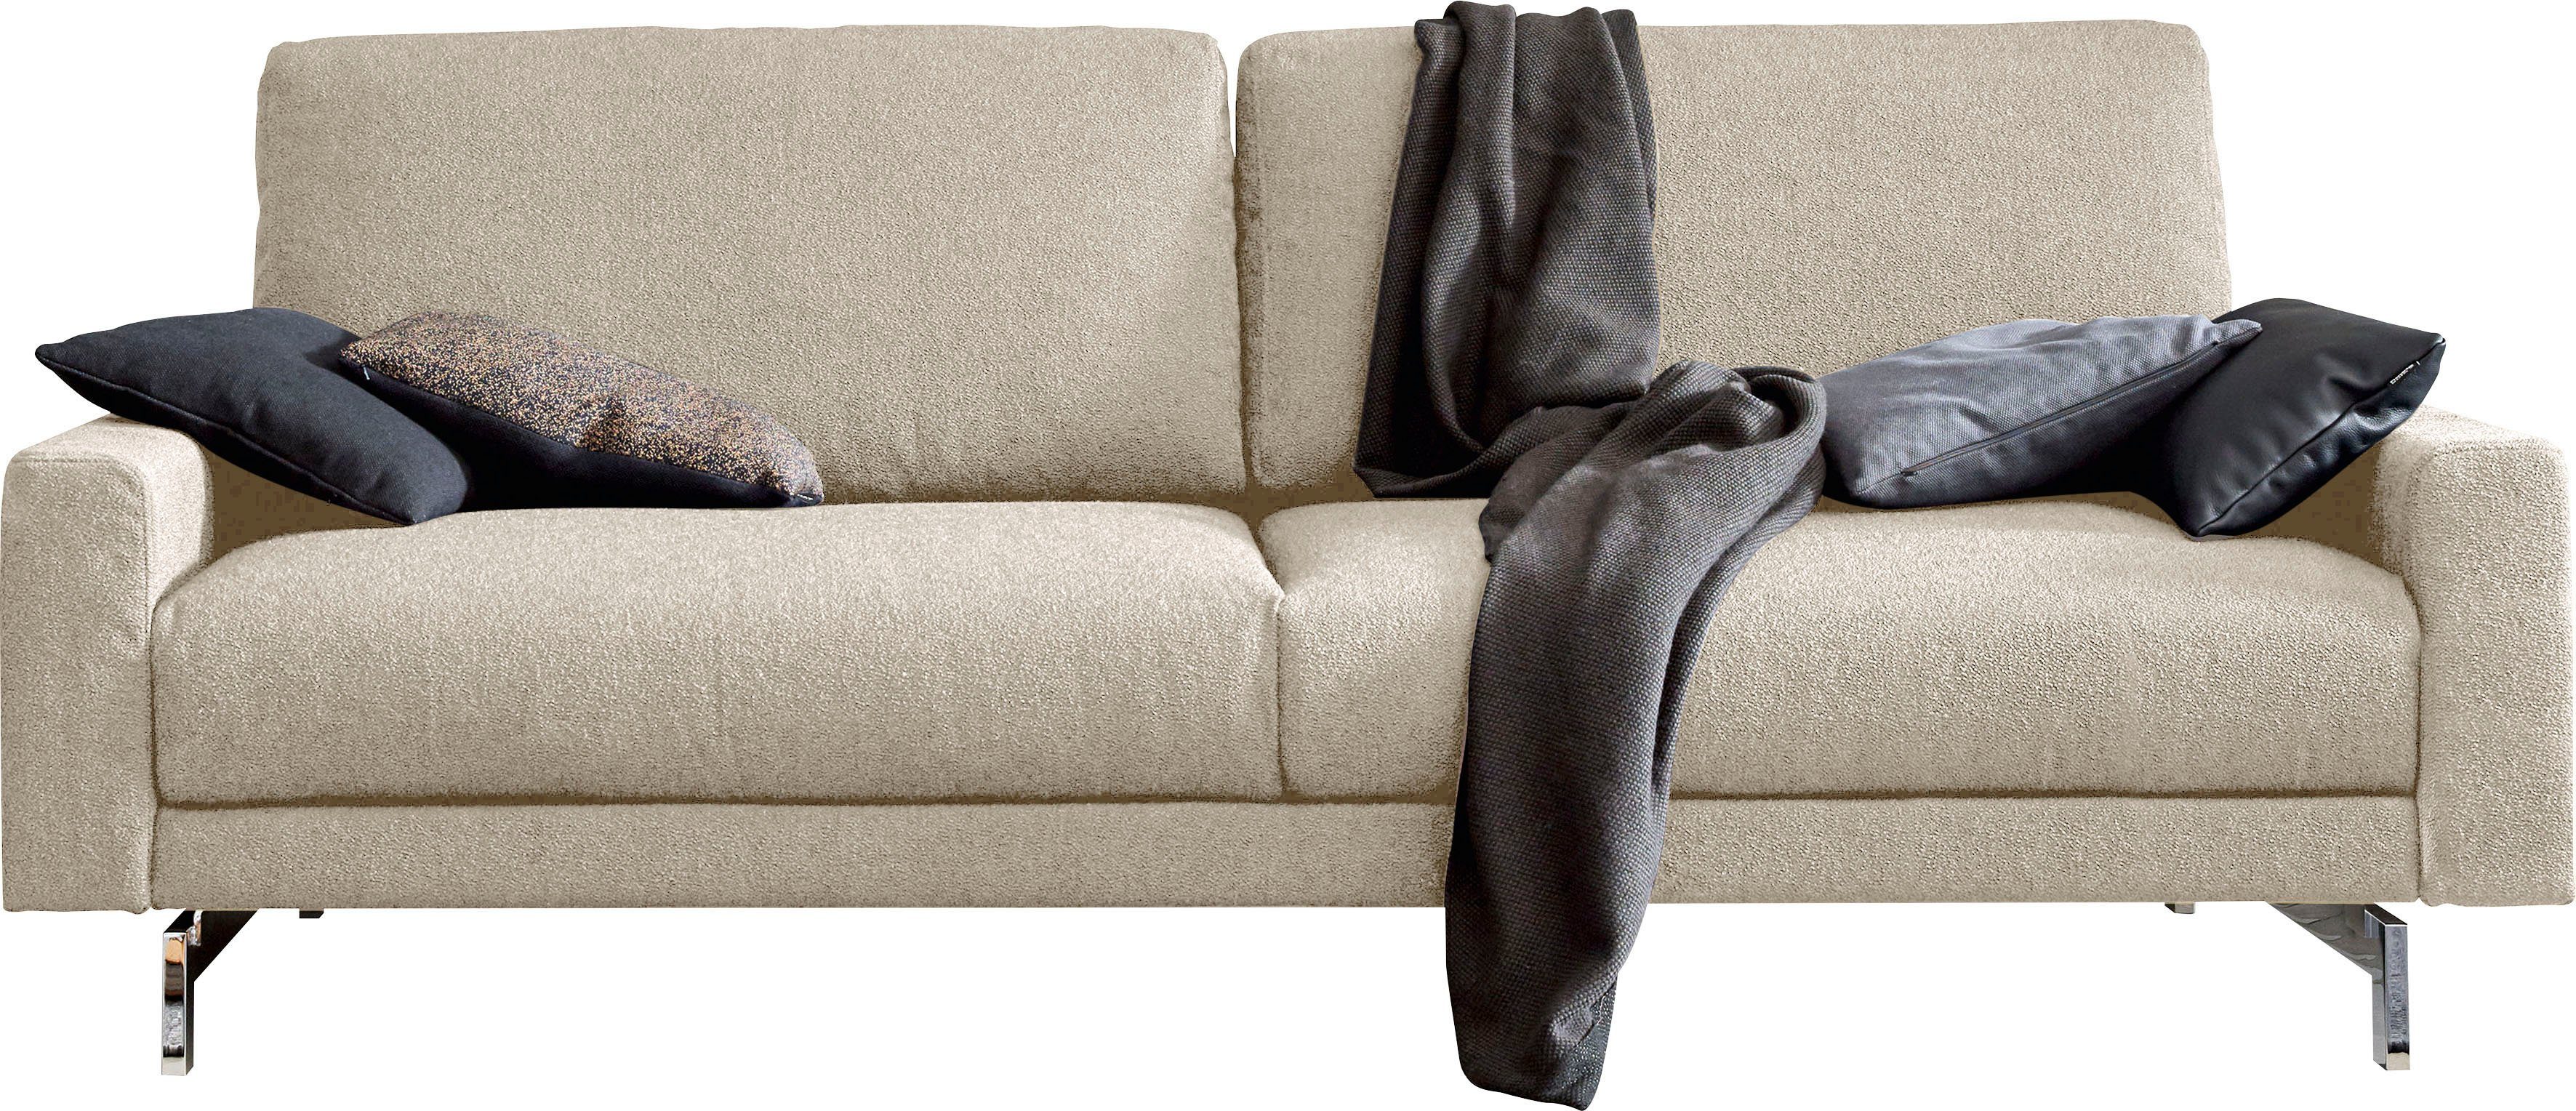 2,5-Sitzer chromfarben glänzend, Armlehne 184 Fuß hülsta niedrig, cm hs.450, sofa Breite